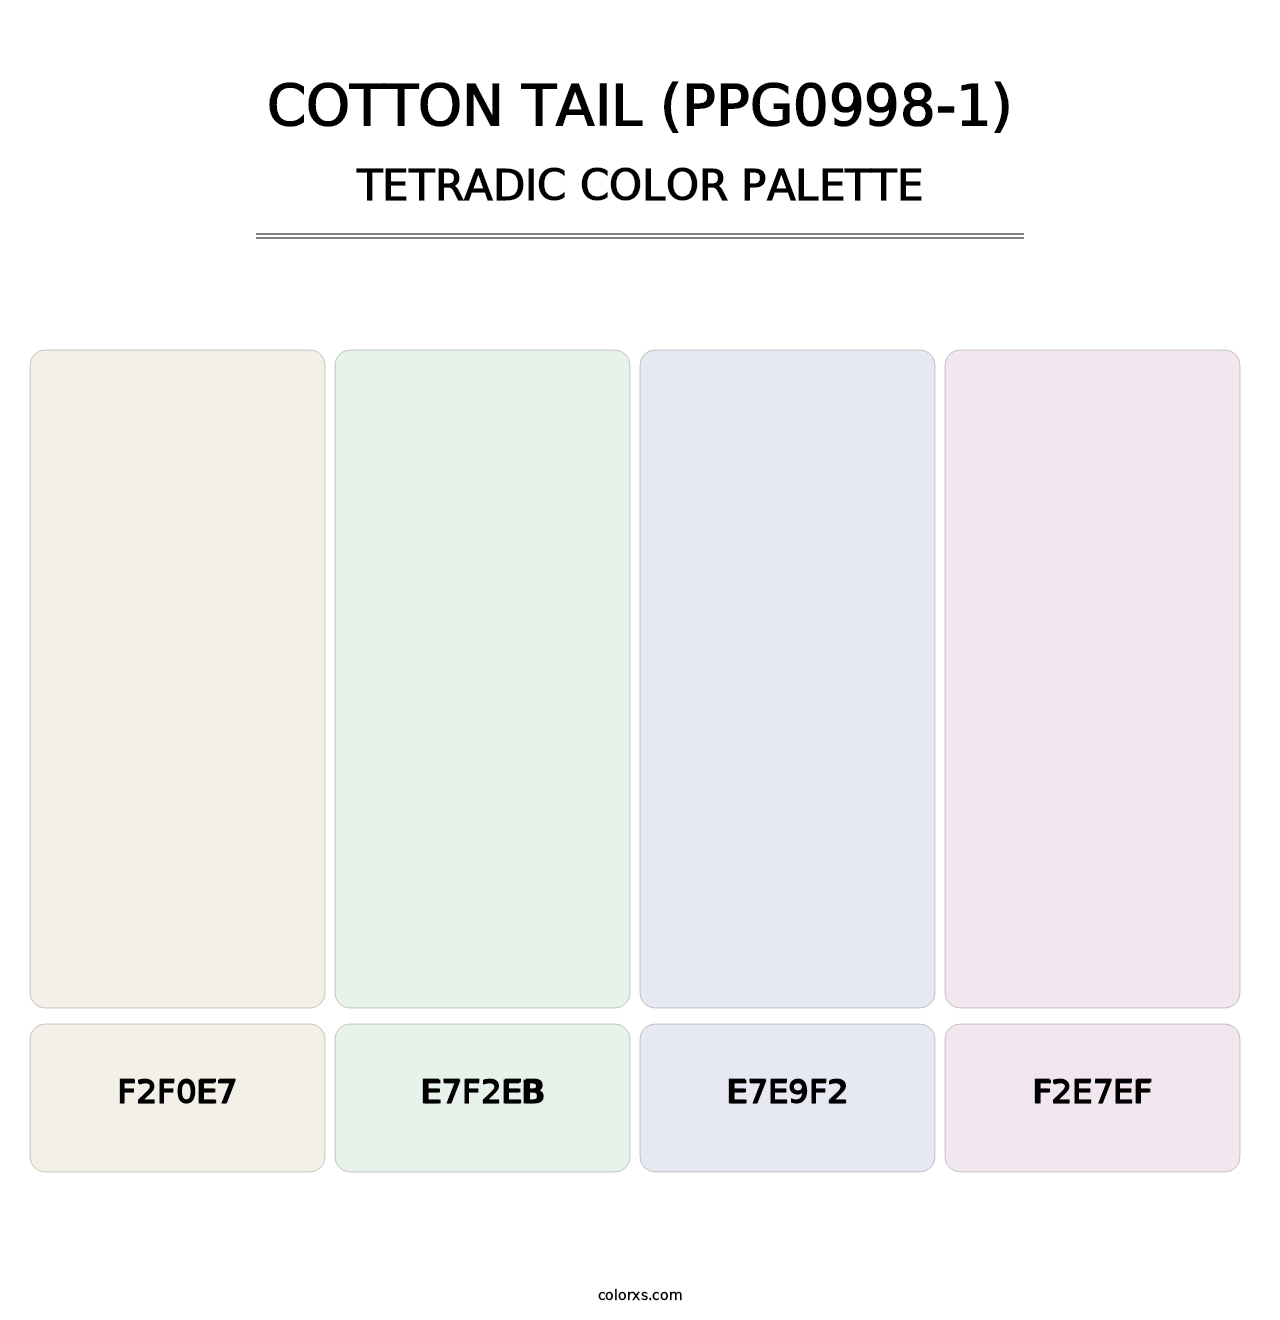 Cotton Tail (PPG0998-1) - Tetradic Color Palette